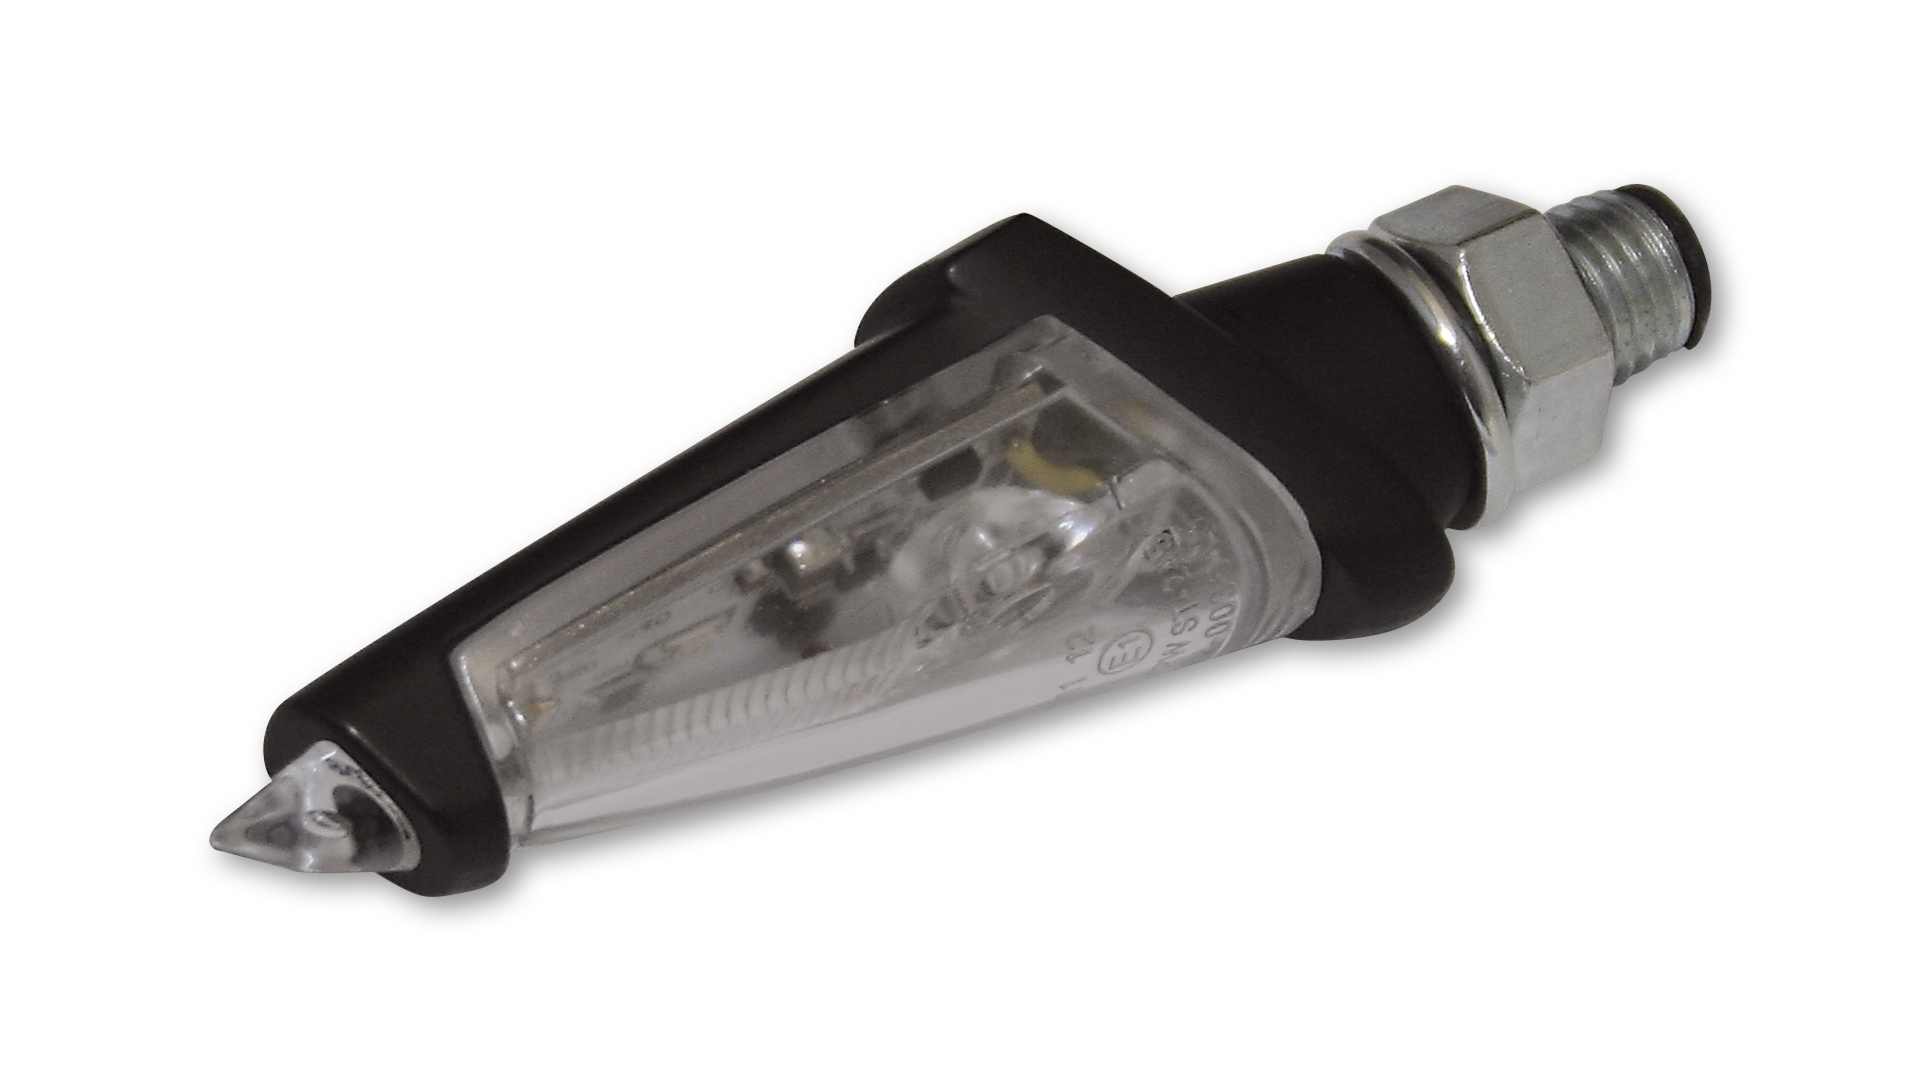 HI-Power LED-Blinker CORTONA, Alu, getöntes Glas, E-geprüft, Paar